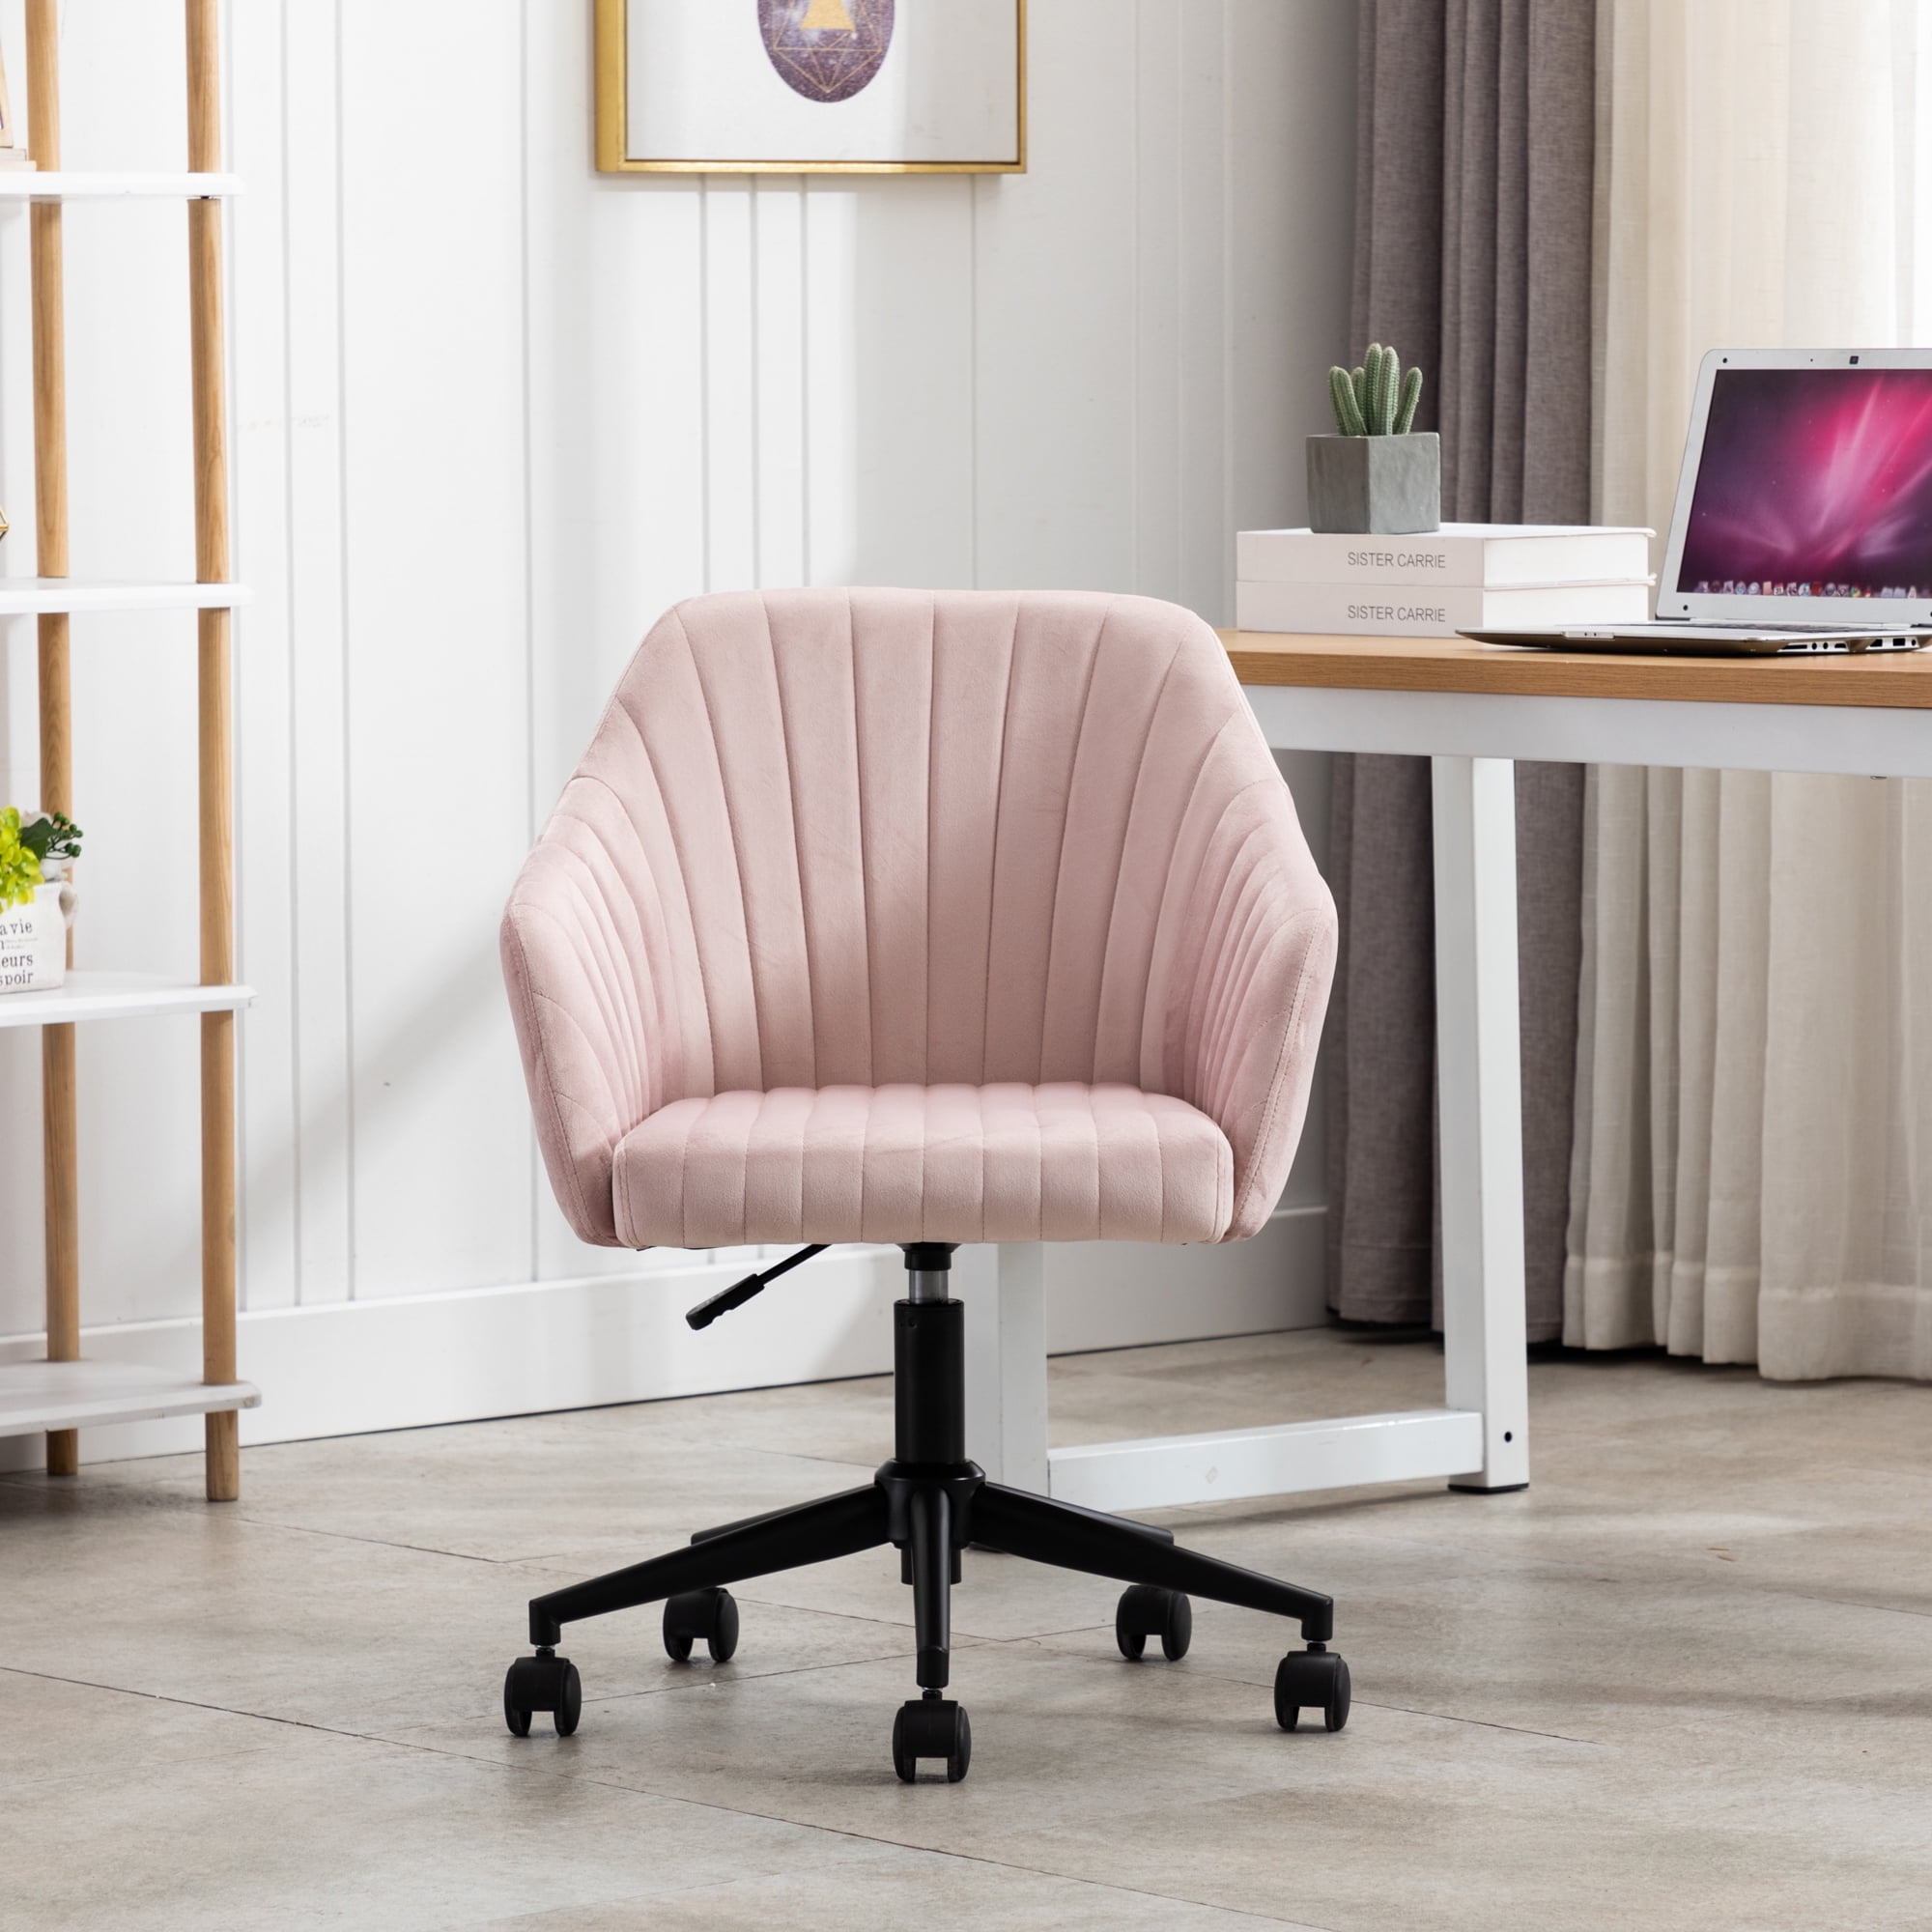 Home Ergonomic Computer Desk Chair Rotatable Adjustable Velvet Upholstered Swivel Chair with Armrest KST Liftable Office Chair Pink Modern Executive Chair for Women